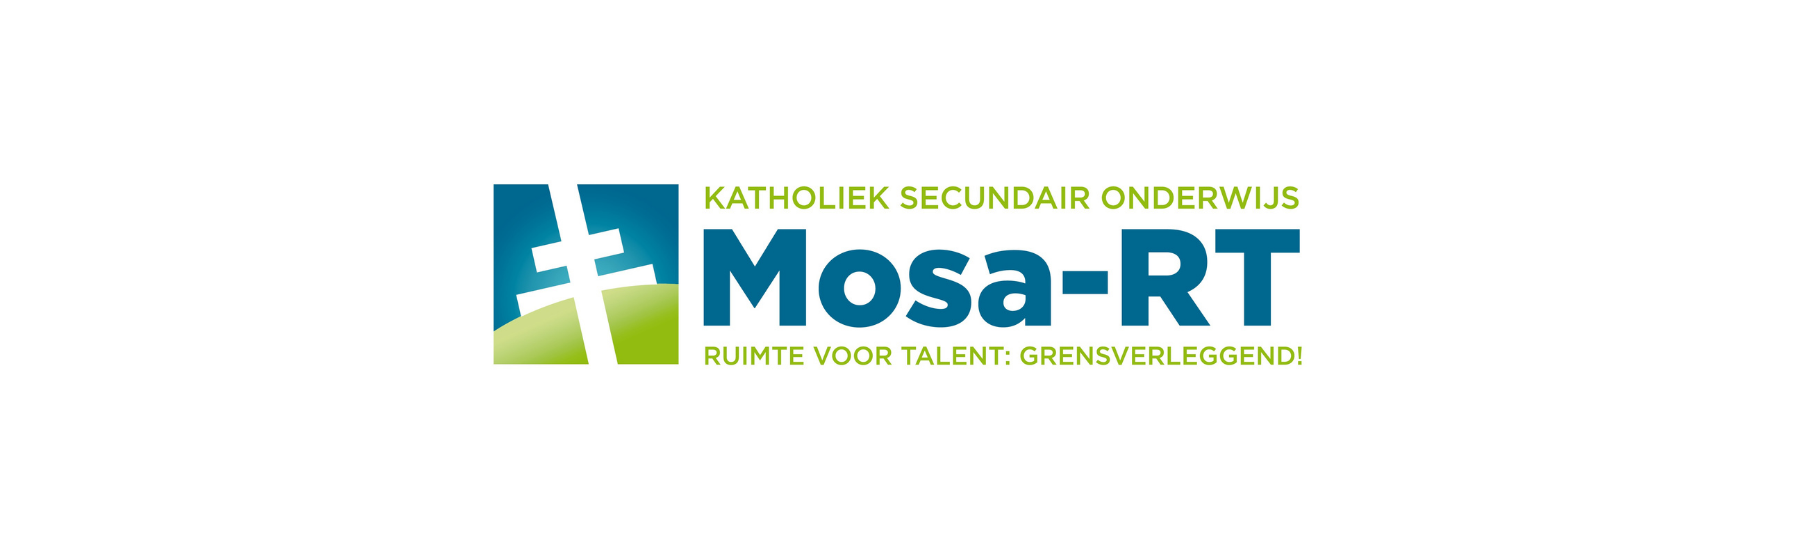 Mosa-RT header - Media Service België